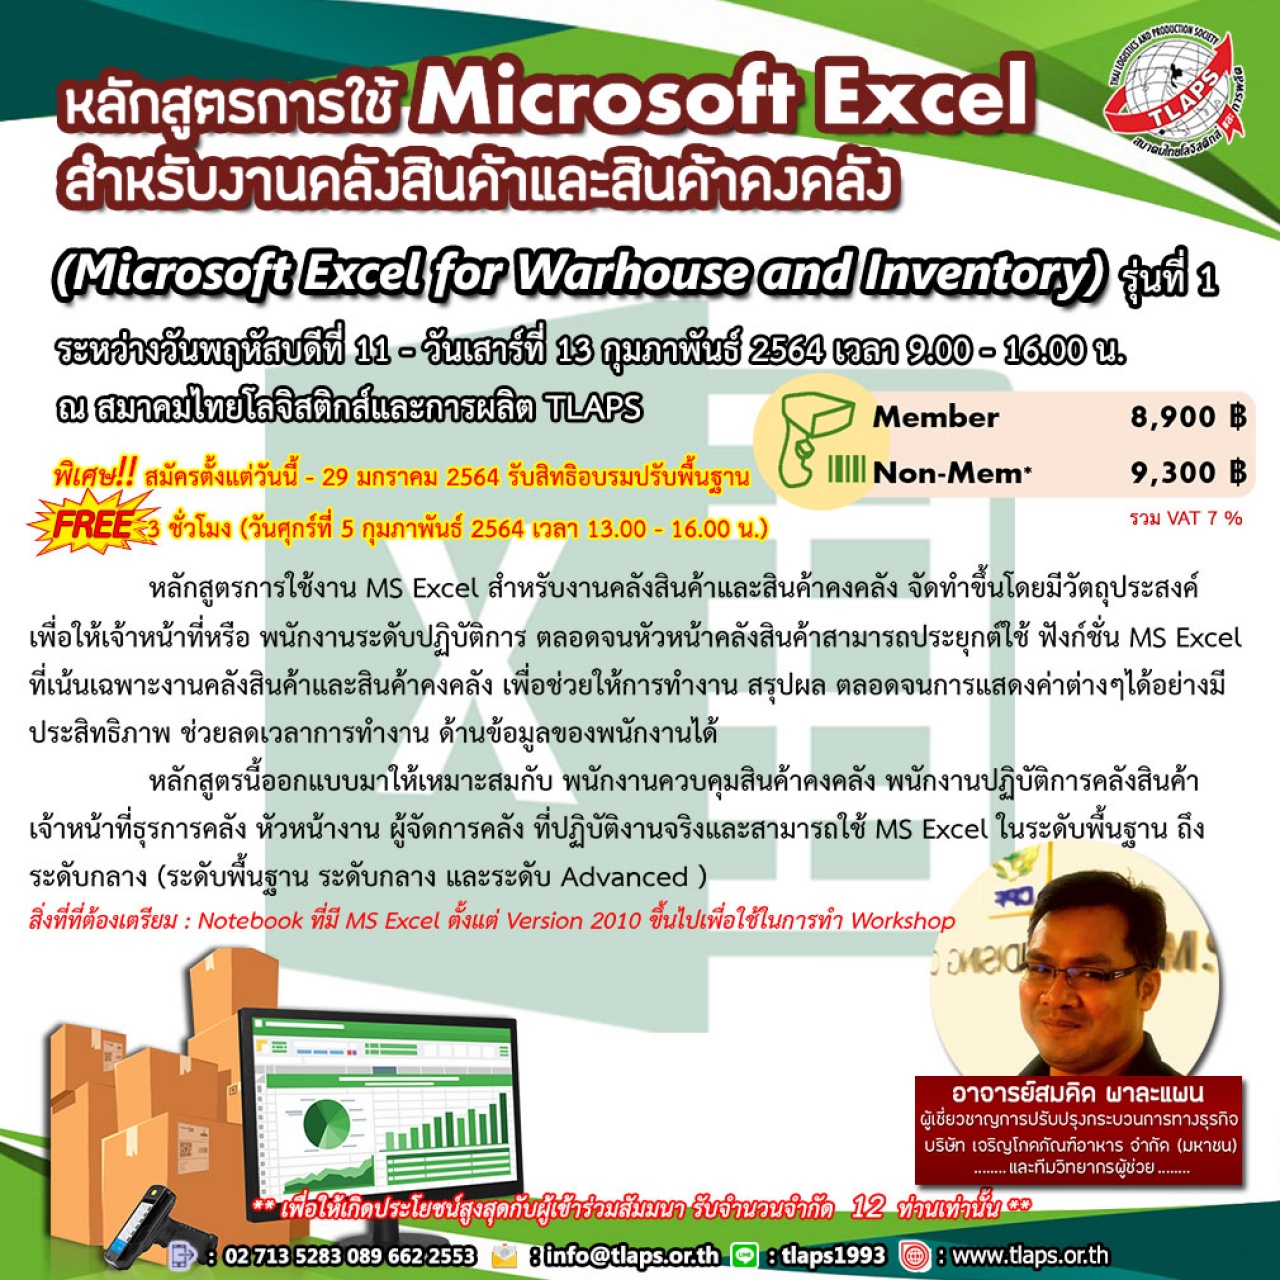 Microsoft Excel for Warehouse and Inventory หลักสูตรการใช้ Microsoft Excel สำหรับงานคลังสินค้าและสินค้าคงคลัง รุ่นที่ 1